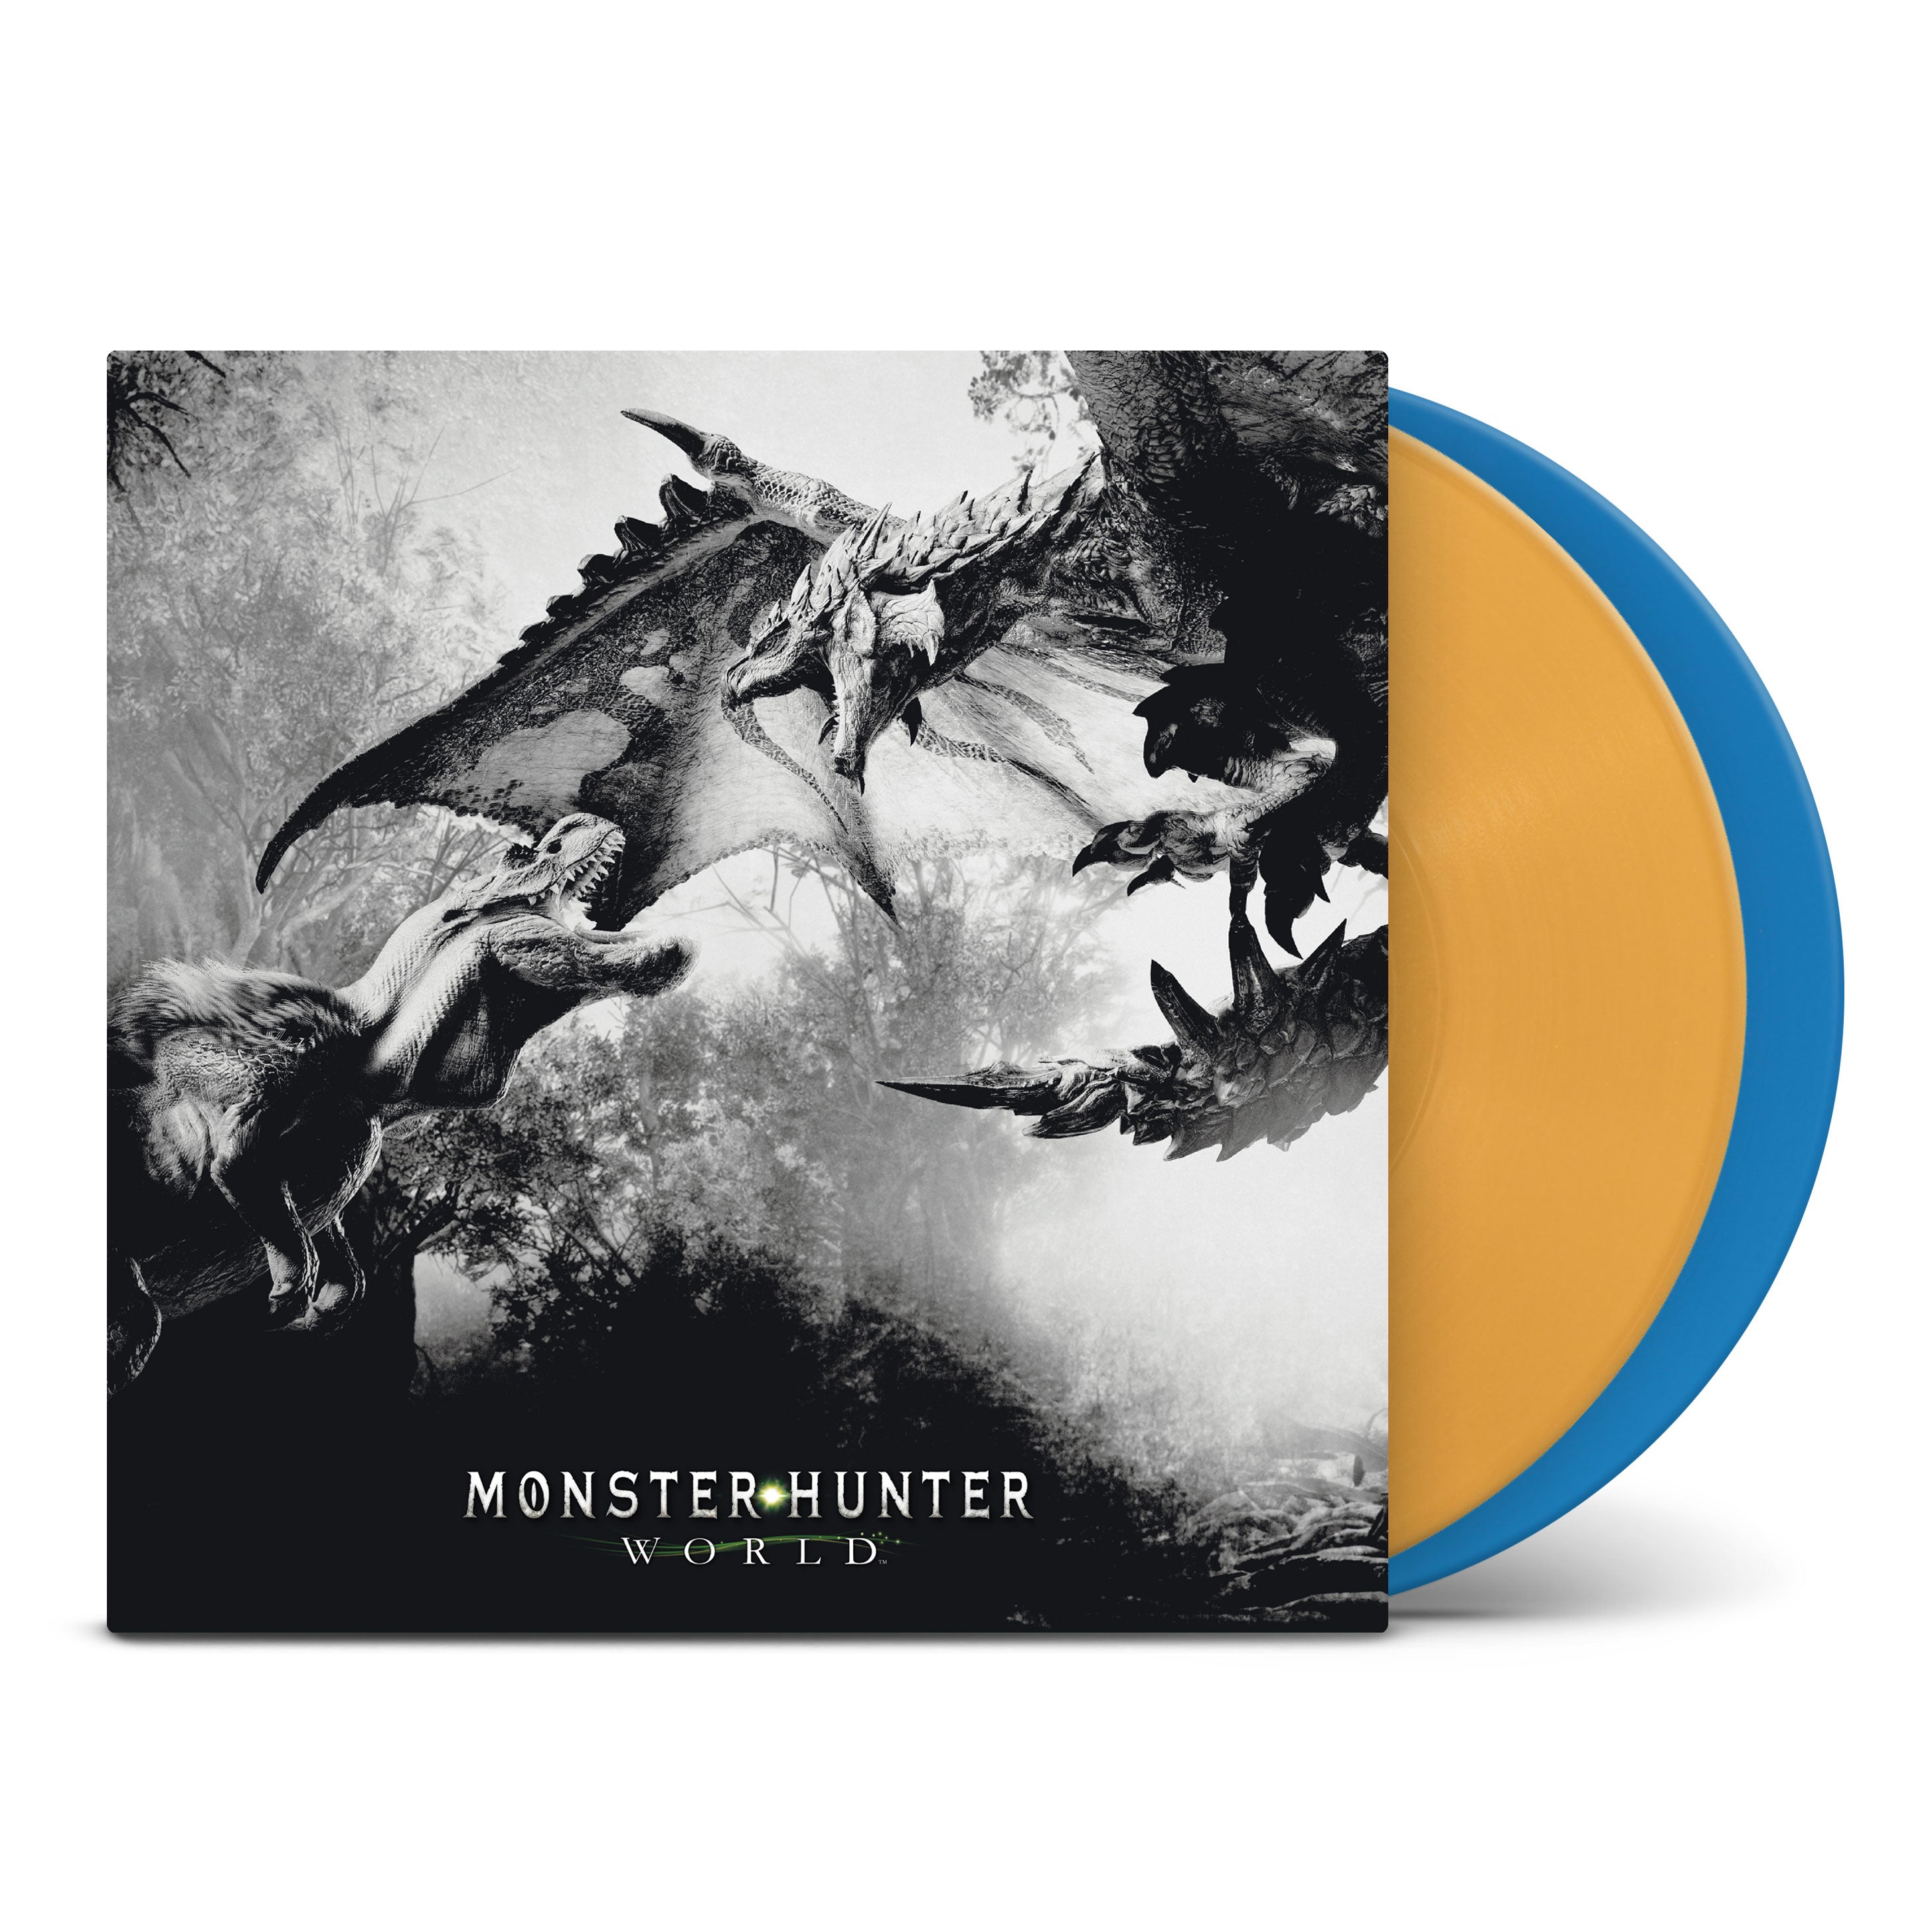 Capcom Sound Team - Monster Hunter - World (Original Soundtrack): Limited Mustard & Blue Vinyl 2LP